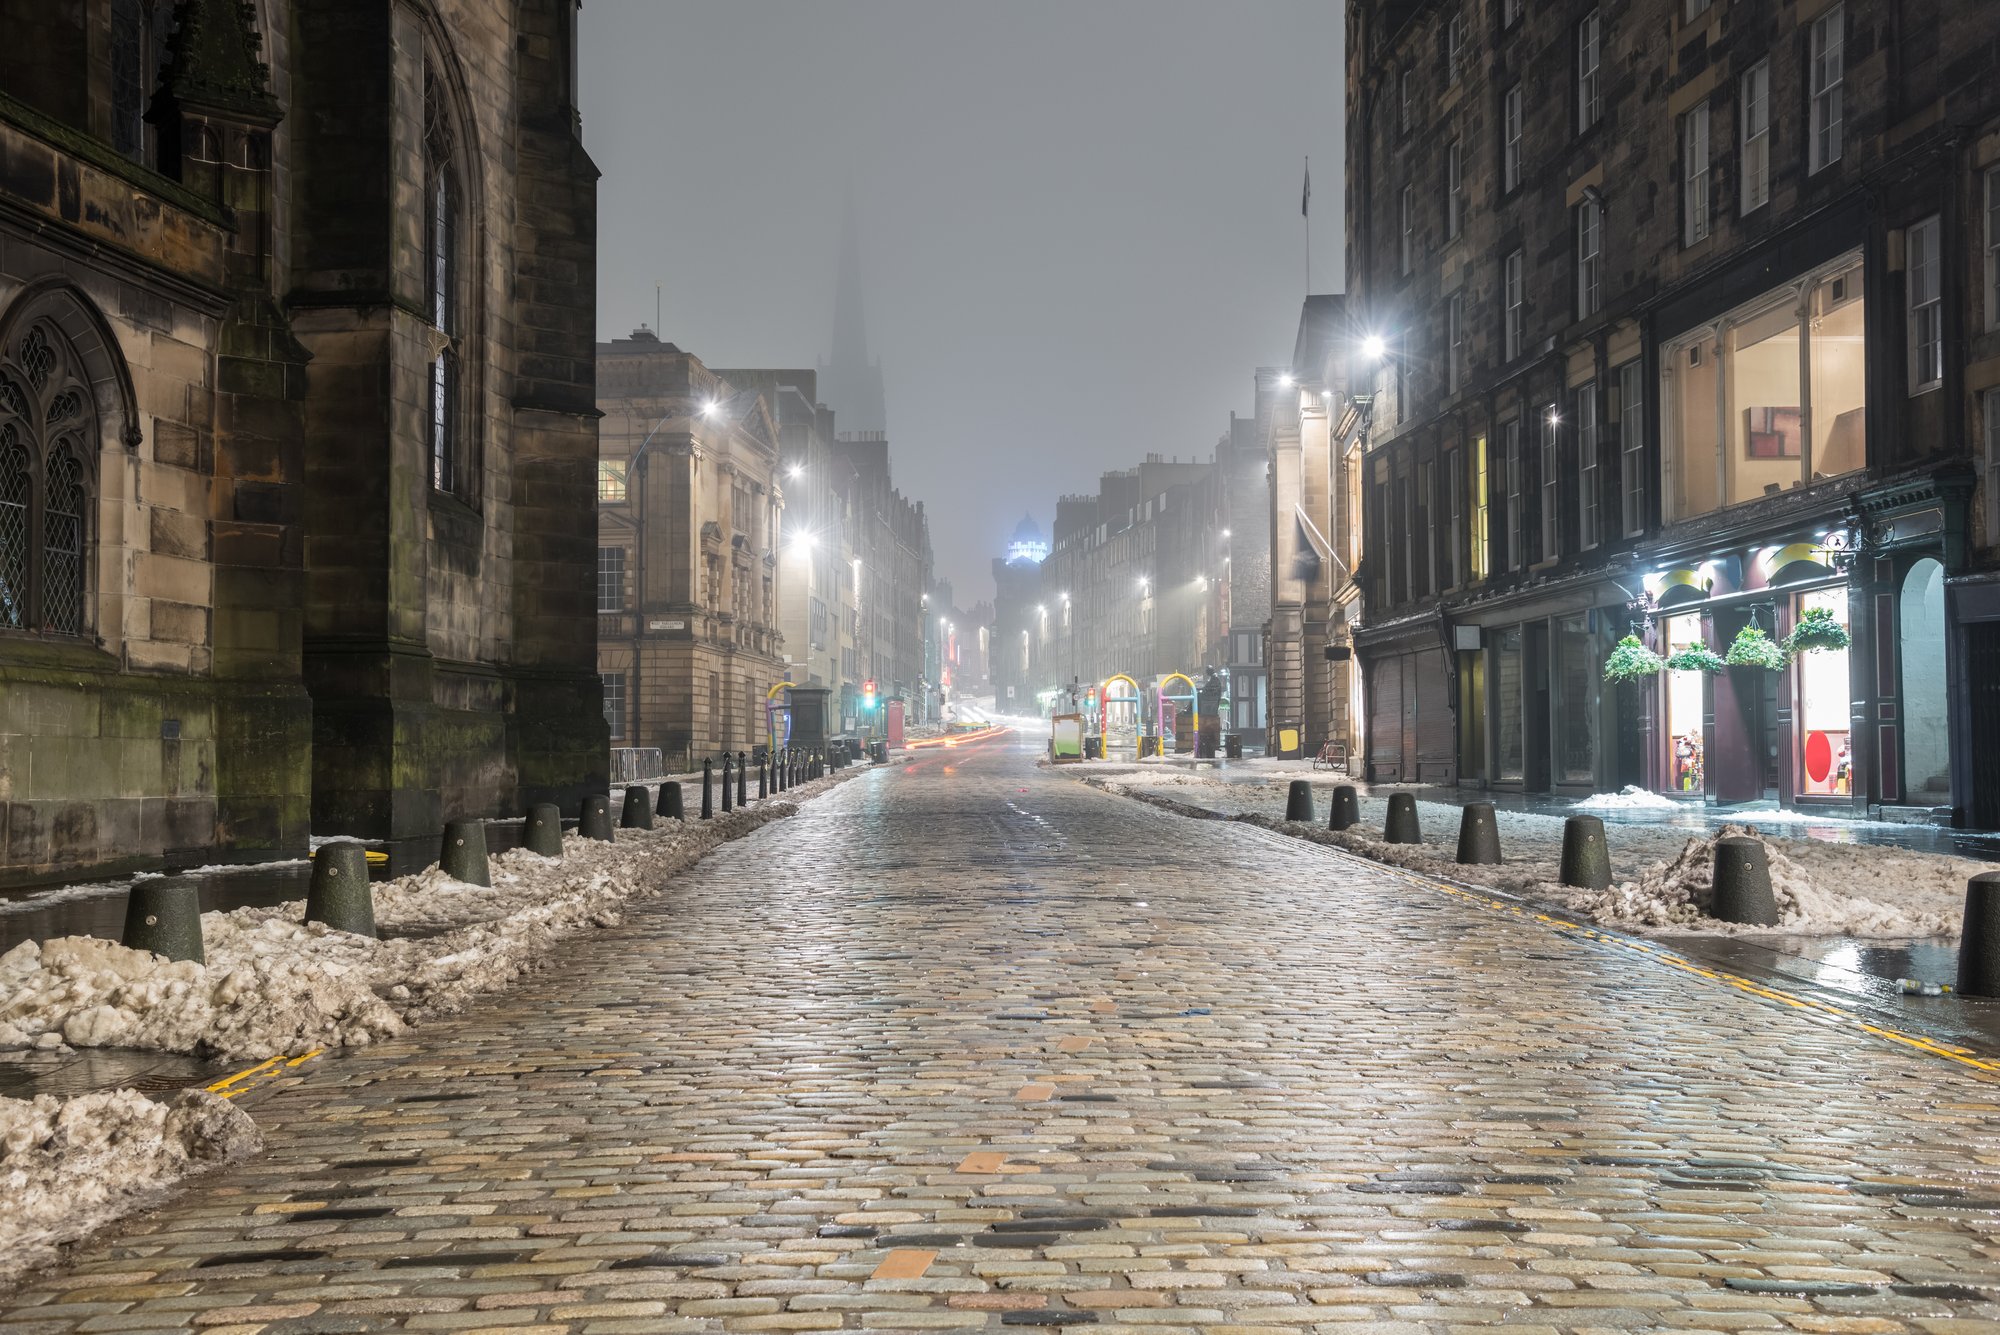 Scotland-street-in-winter